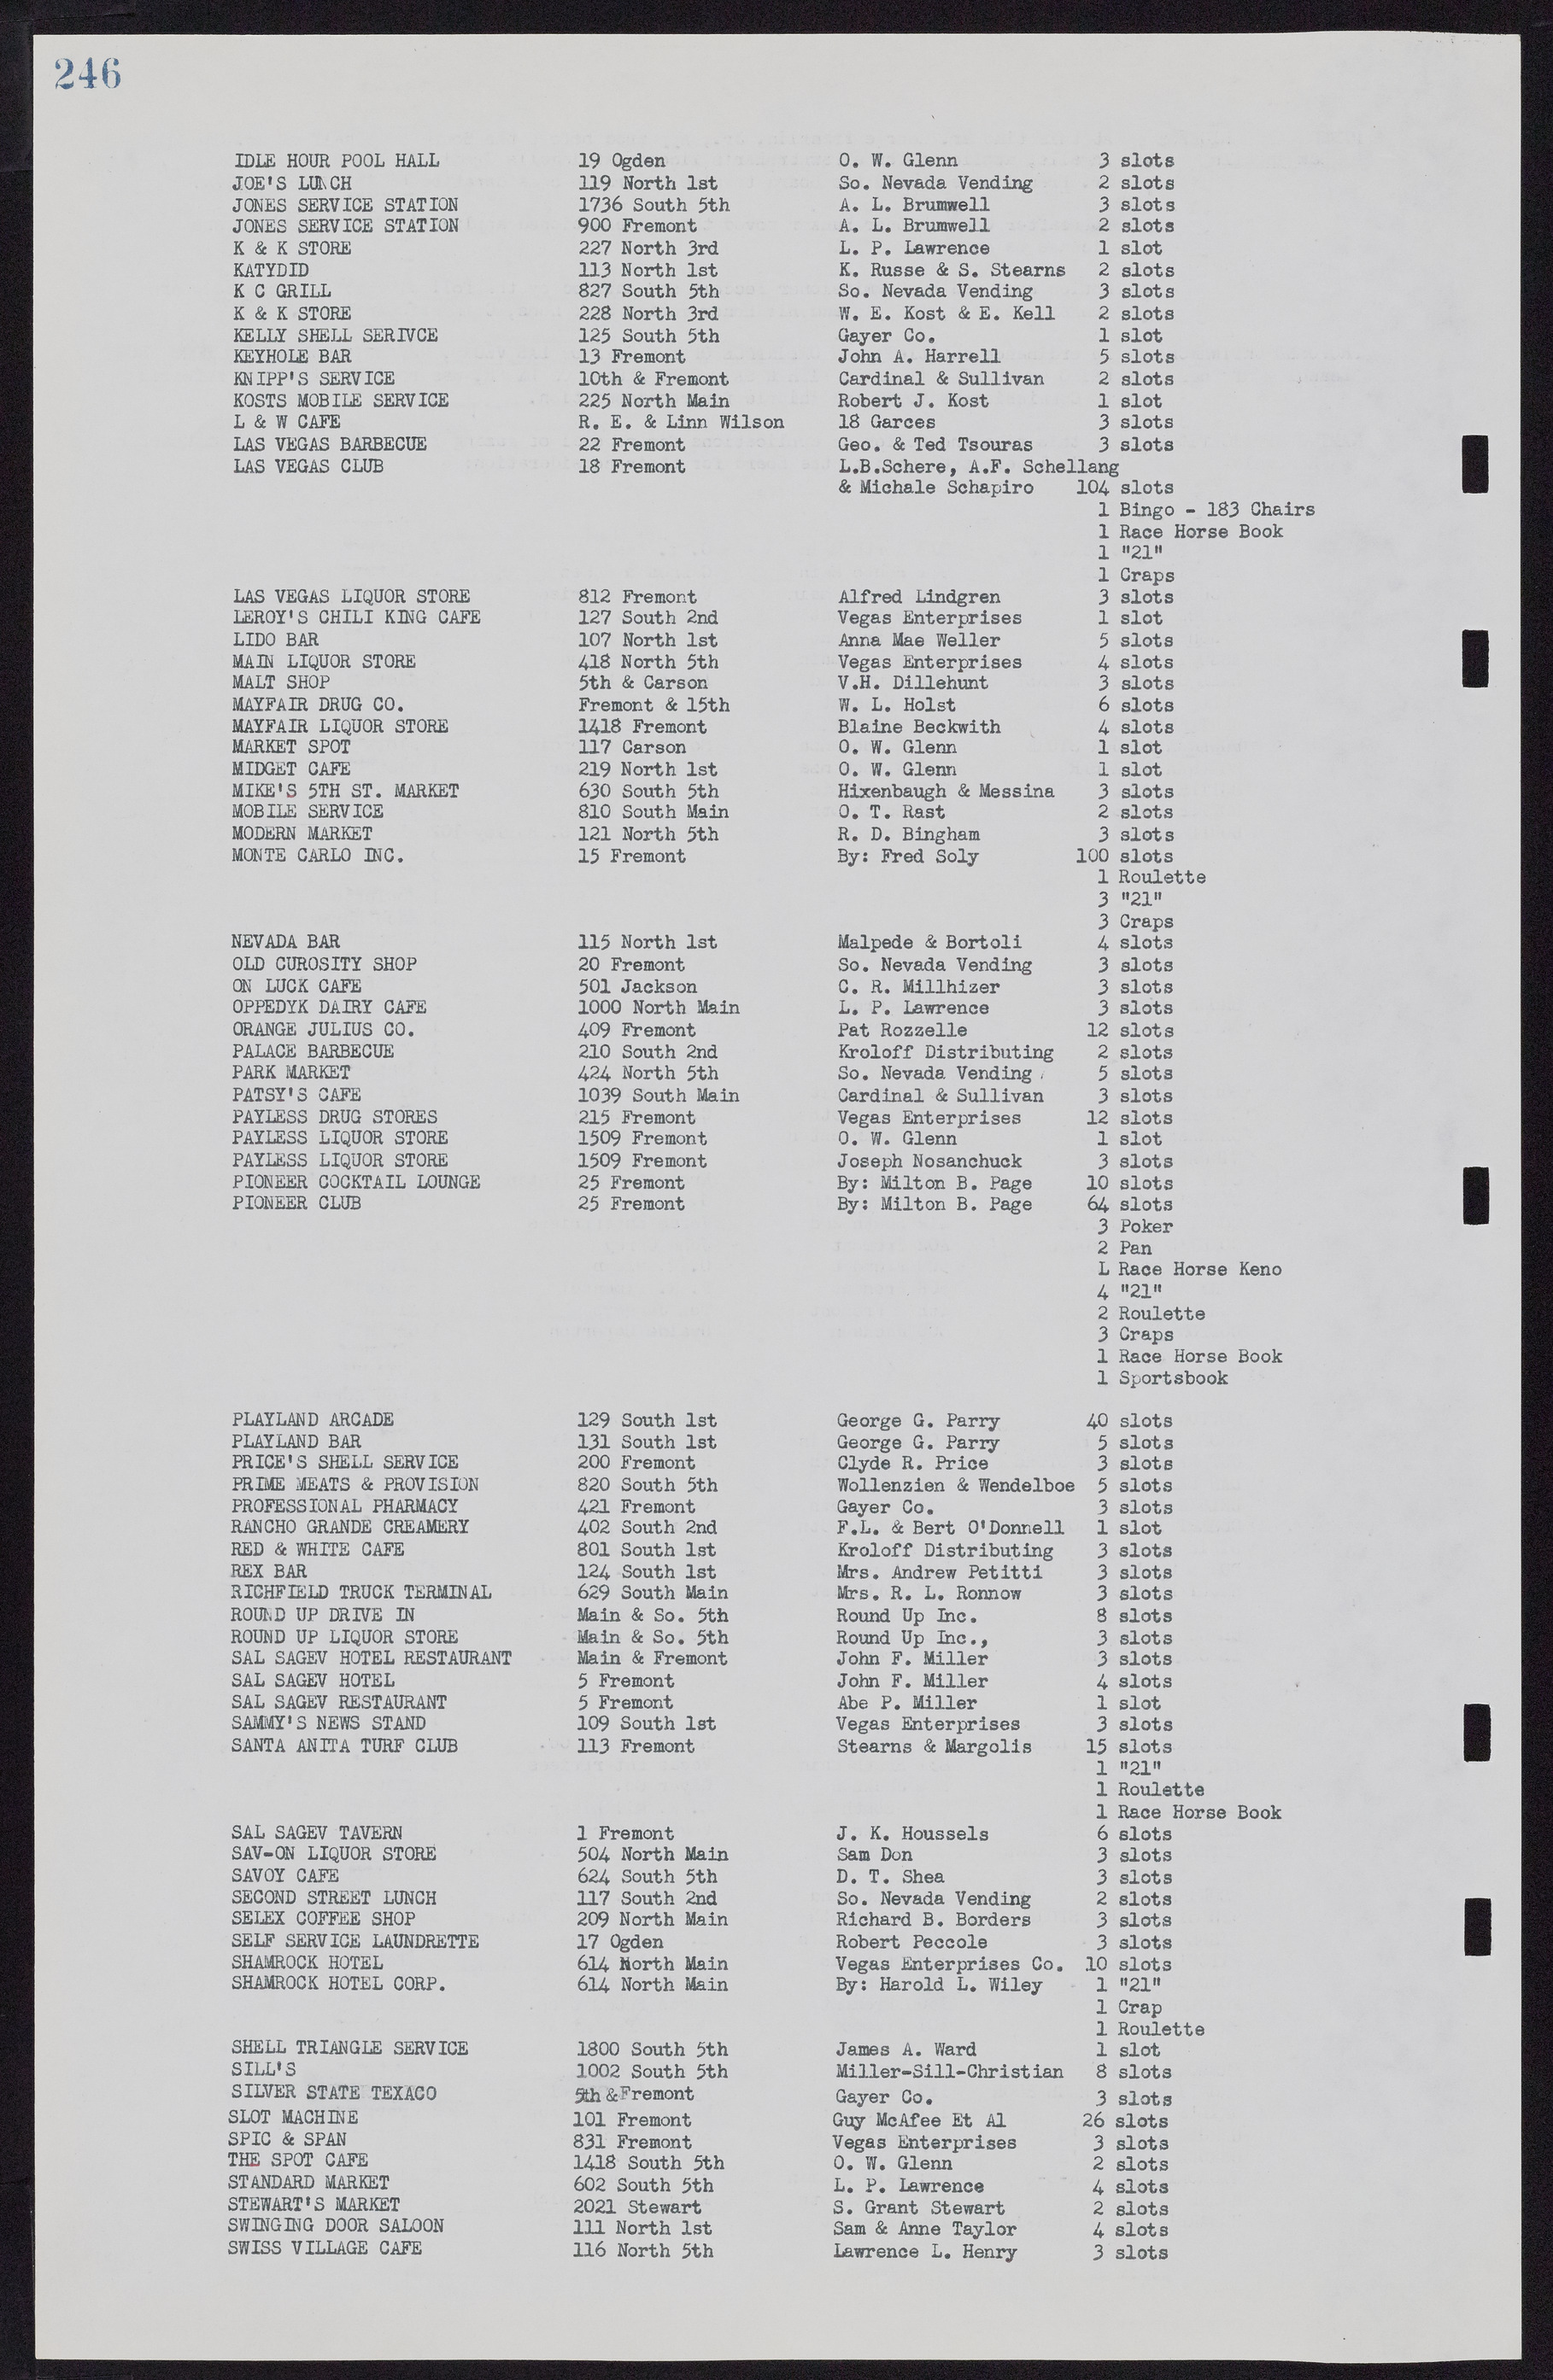 Las Vegas City Commission Minutes, November 7, 1949 to May 21, 1952, lvc000007-256